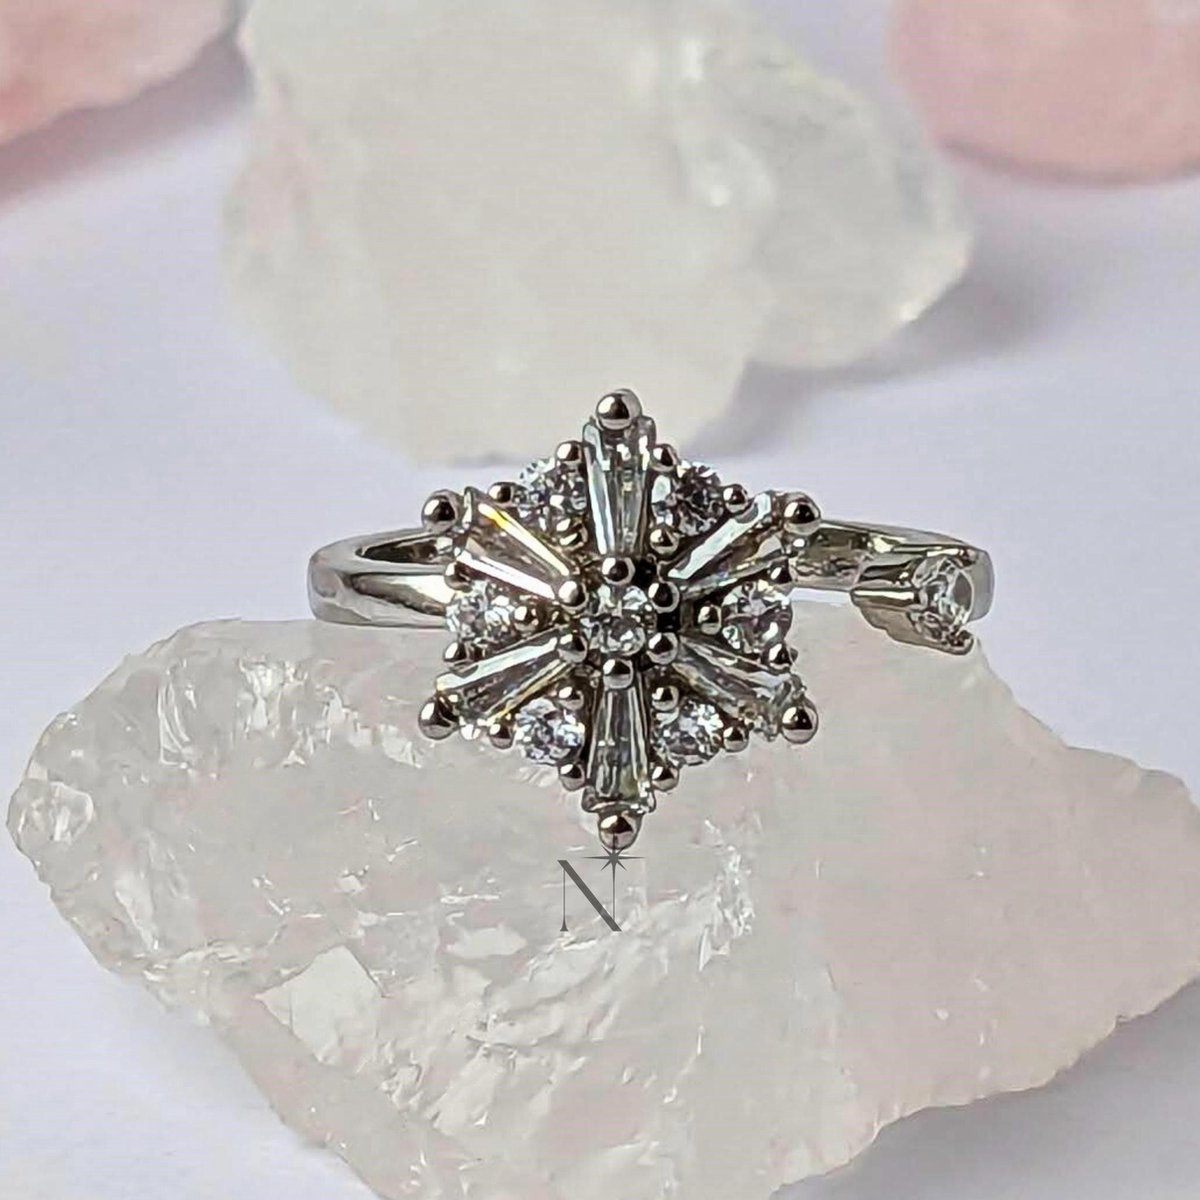 Luminora Snowflake Ring Zilver - Fidget Ring Sneeuwvlok - Anxiety Ring - Stress Ring - Anti Stress Ring - Spinner Ring - Spinning Ring - Draai Ring - Wellness Sieraden